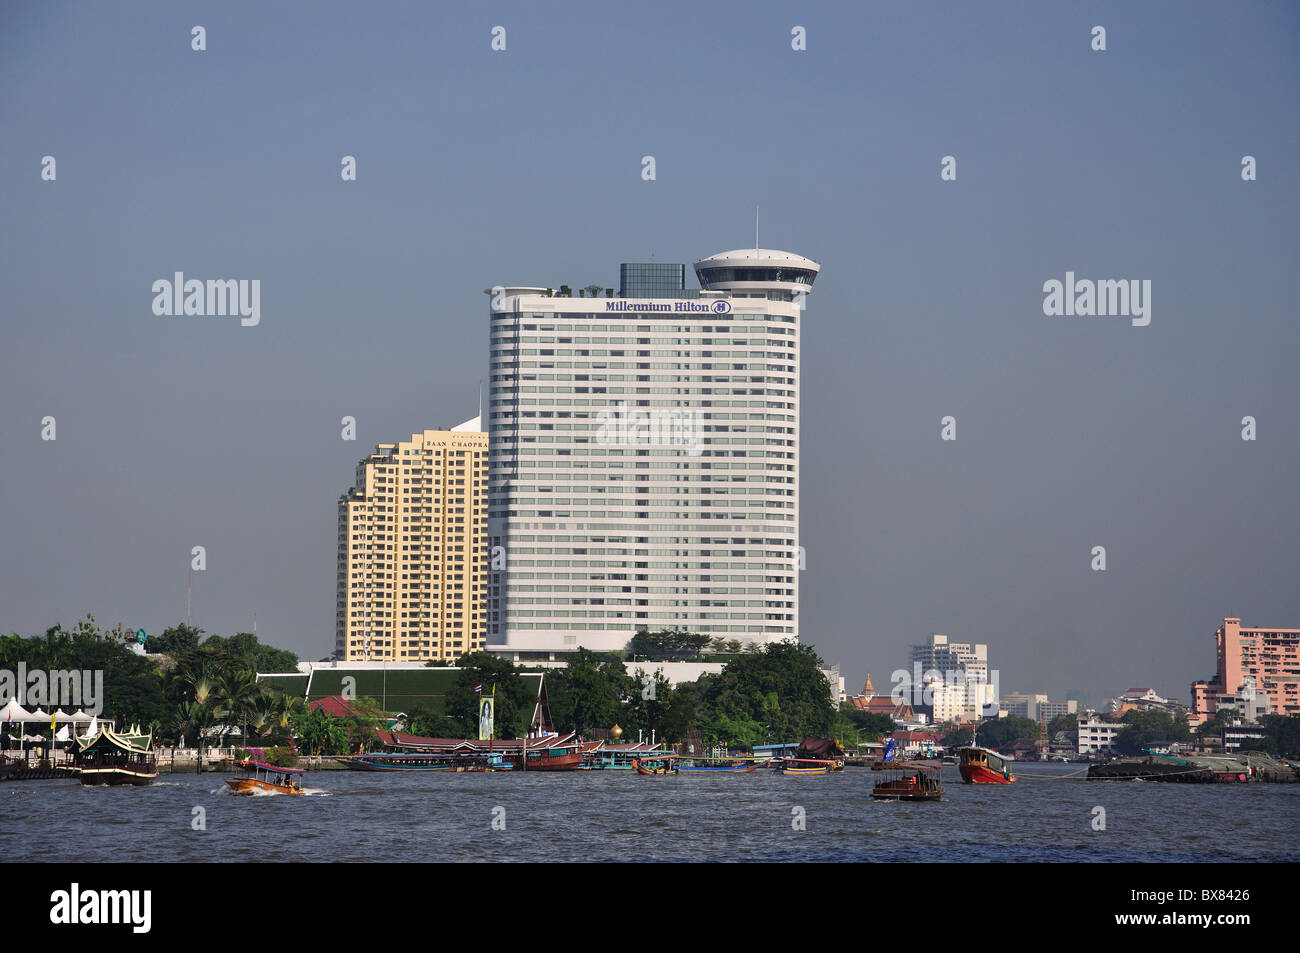 Milennium Hilton Hotel à travers la rivière Chao Phraya, District Khlong Sarn Bangkok, Thaïlande Banque D'Images